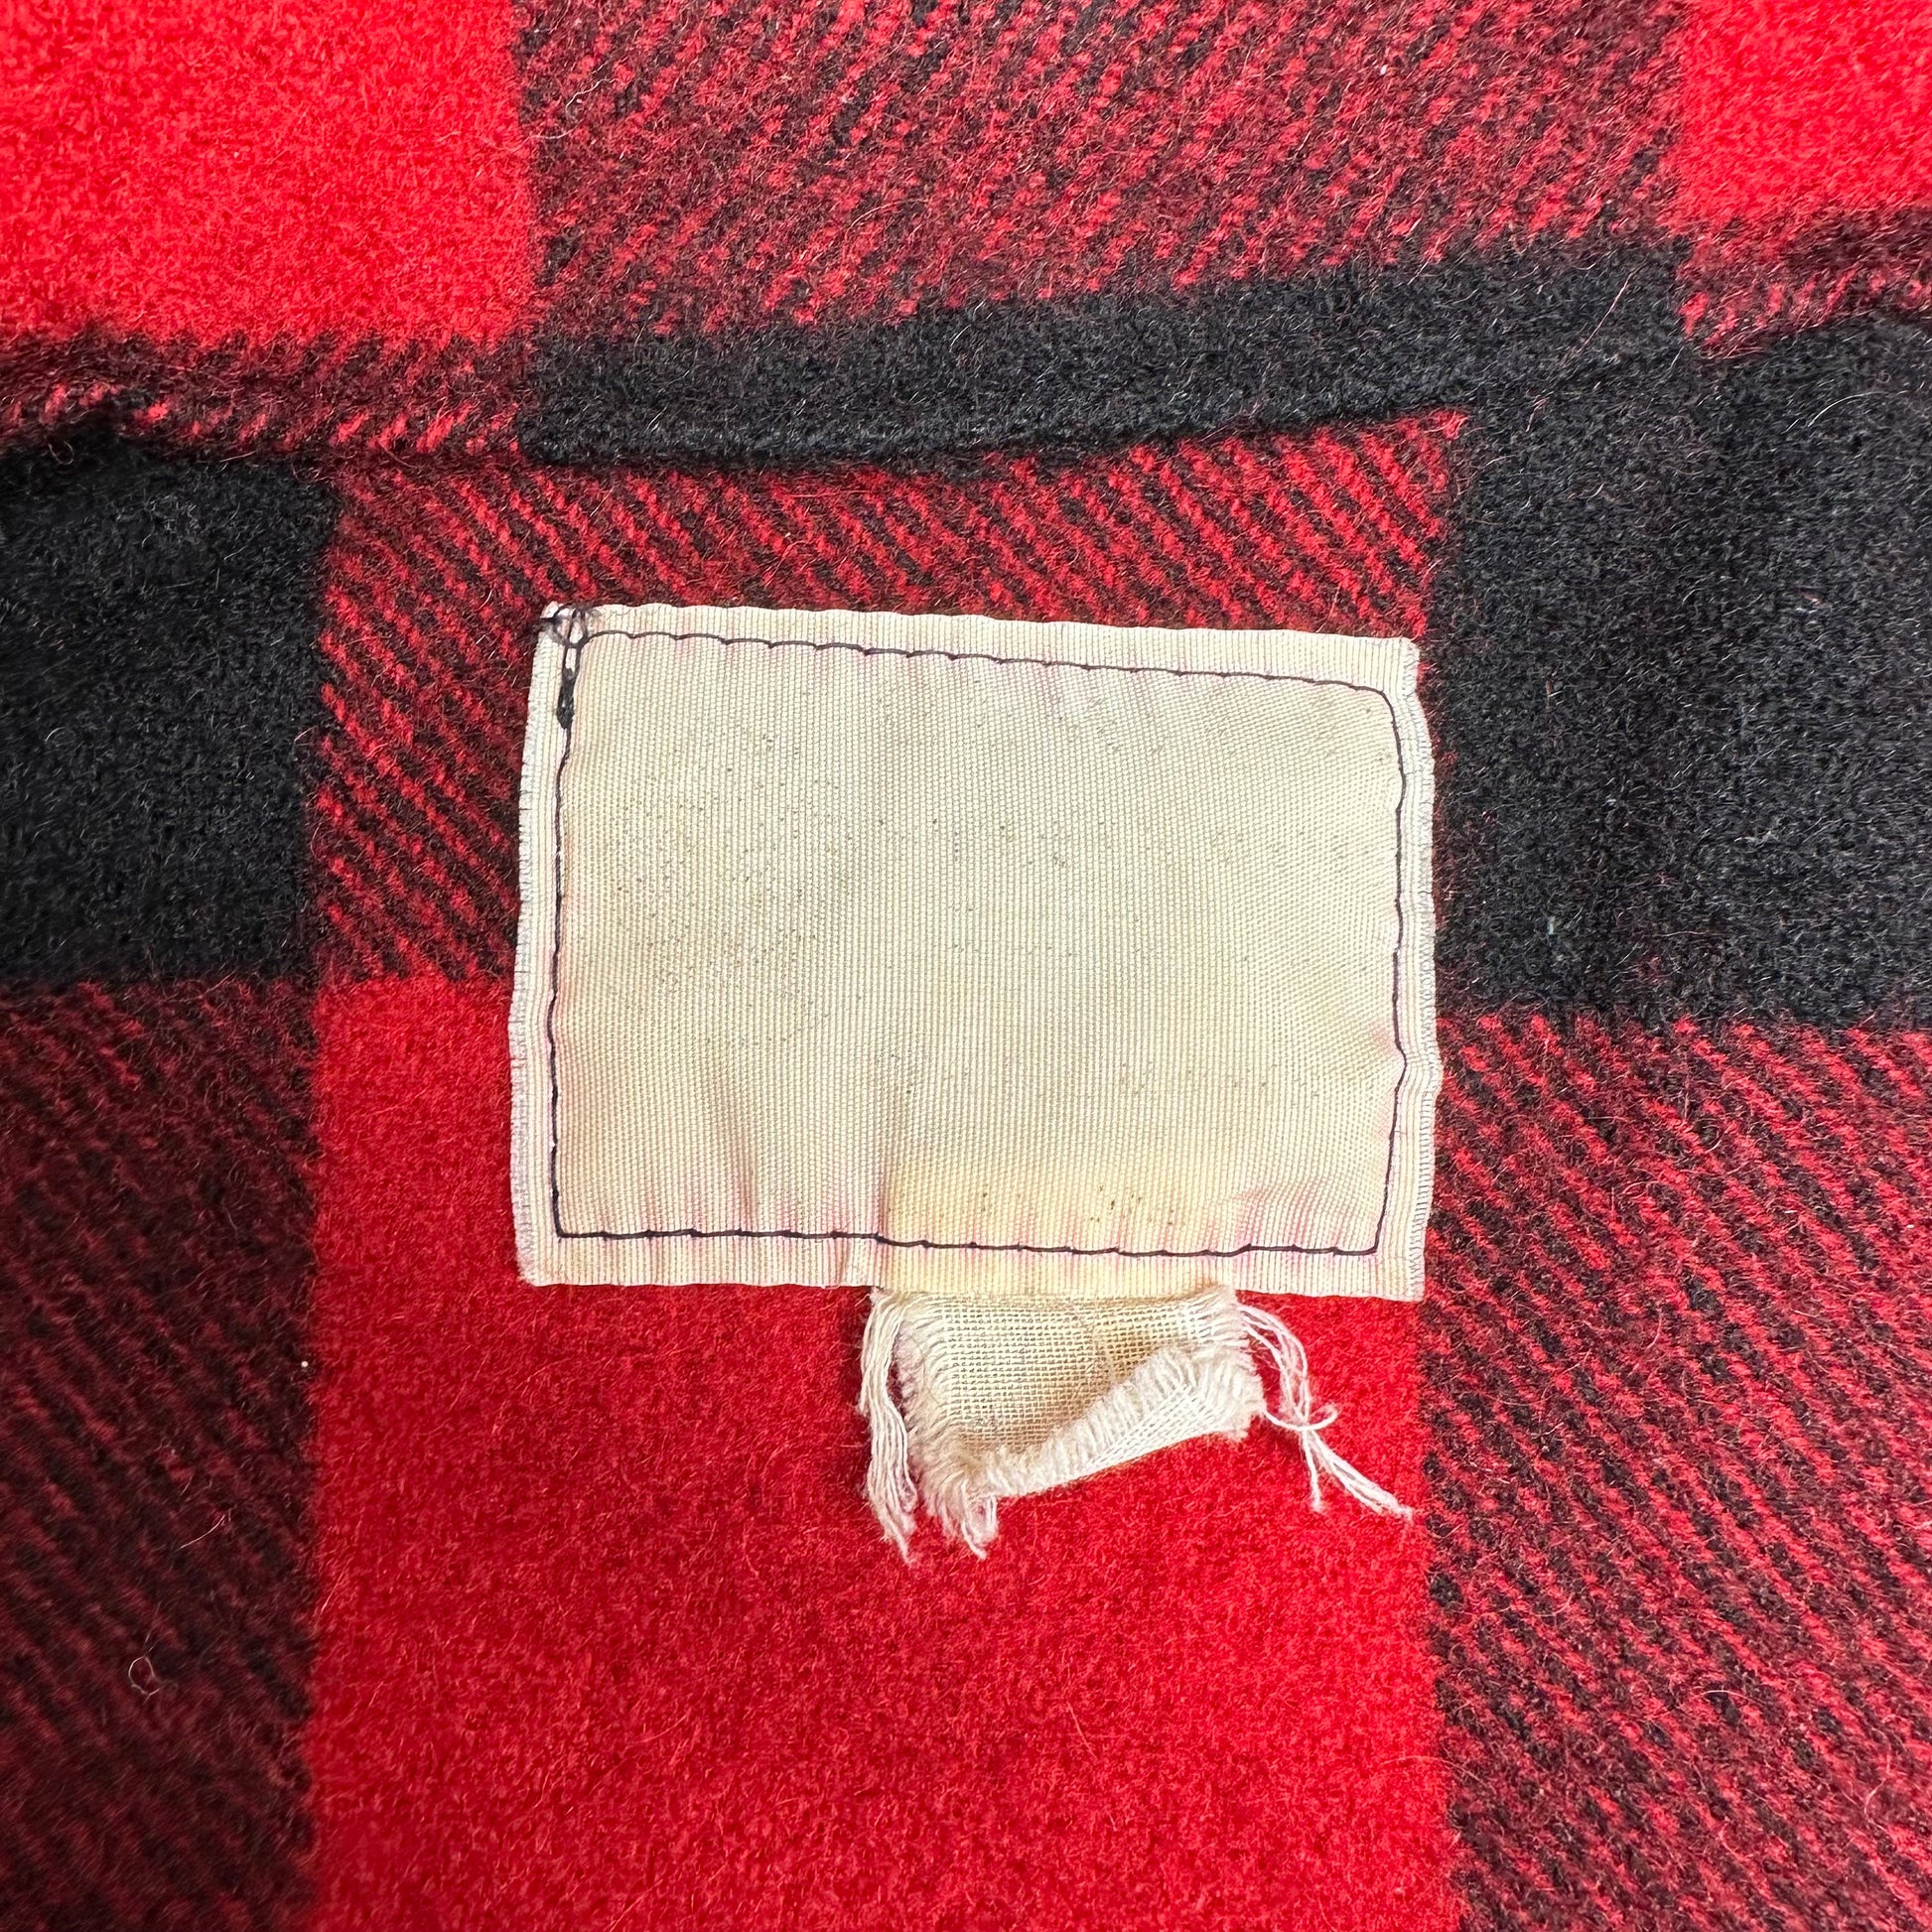 Petite Medium 60s 70s Buffalo Plaid Wool Jacket | Vintage Black & Red Button Up Lumberjack Overshirt Shacket